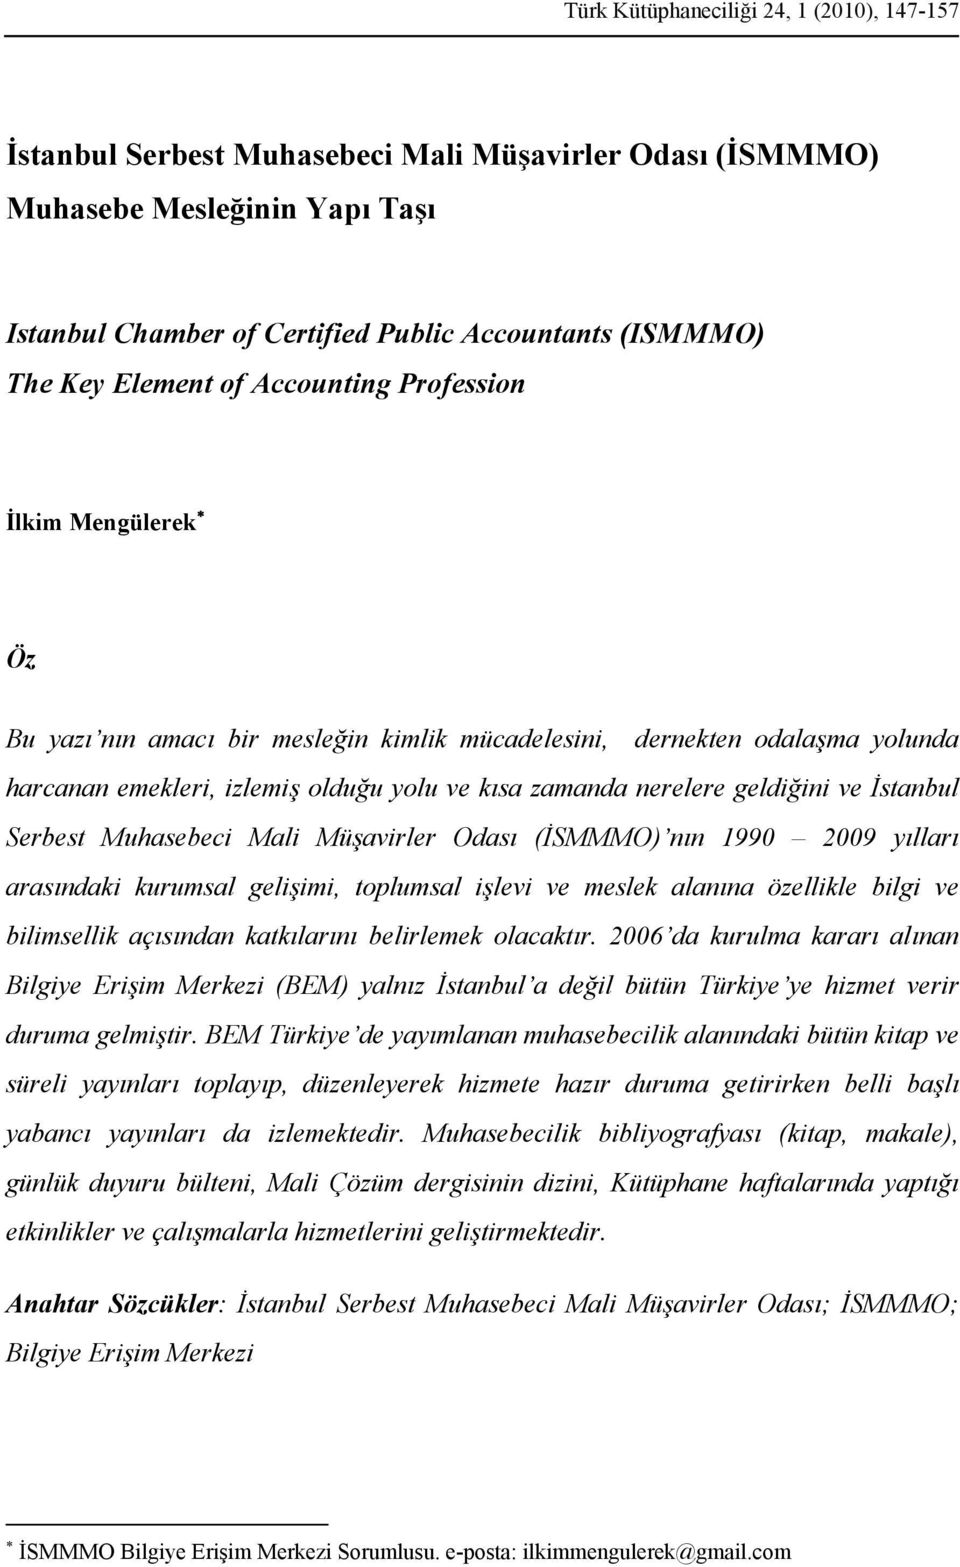 istanbul serbest muhasebeci mali musavirler odasi ismmmo muhasebe mesleginin yapi tasi pdf free download